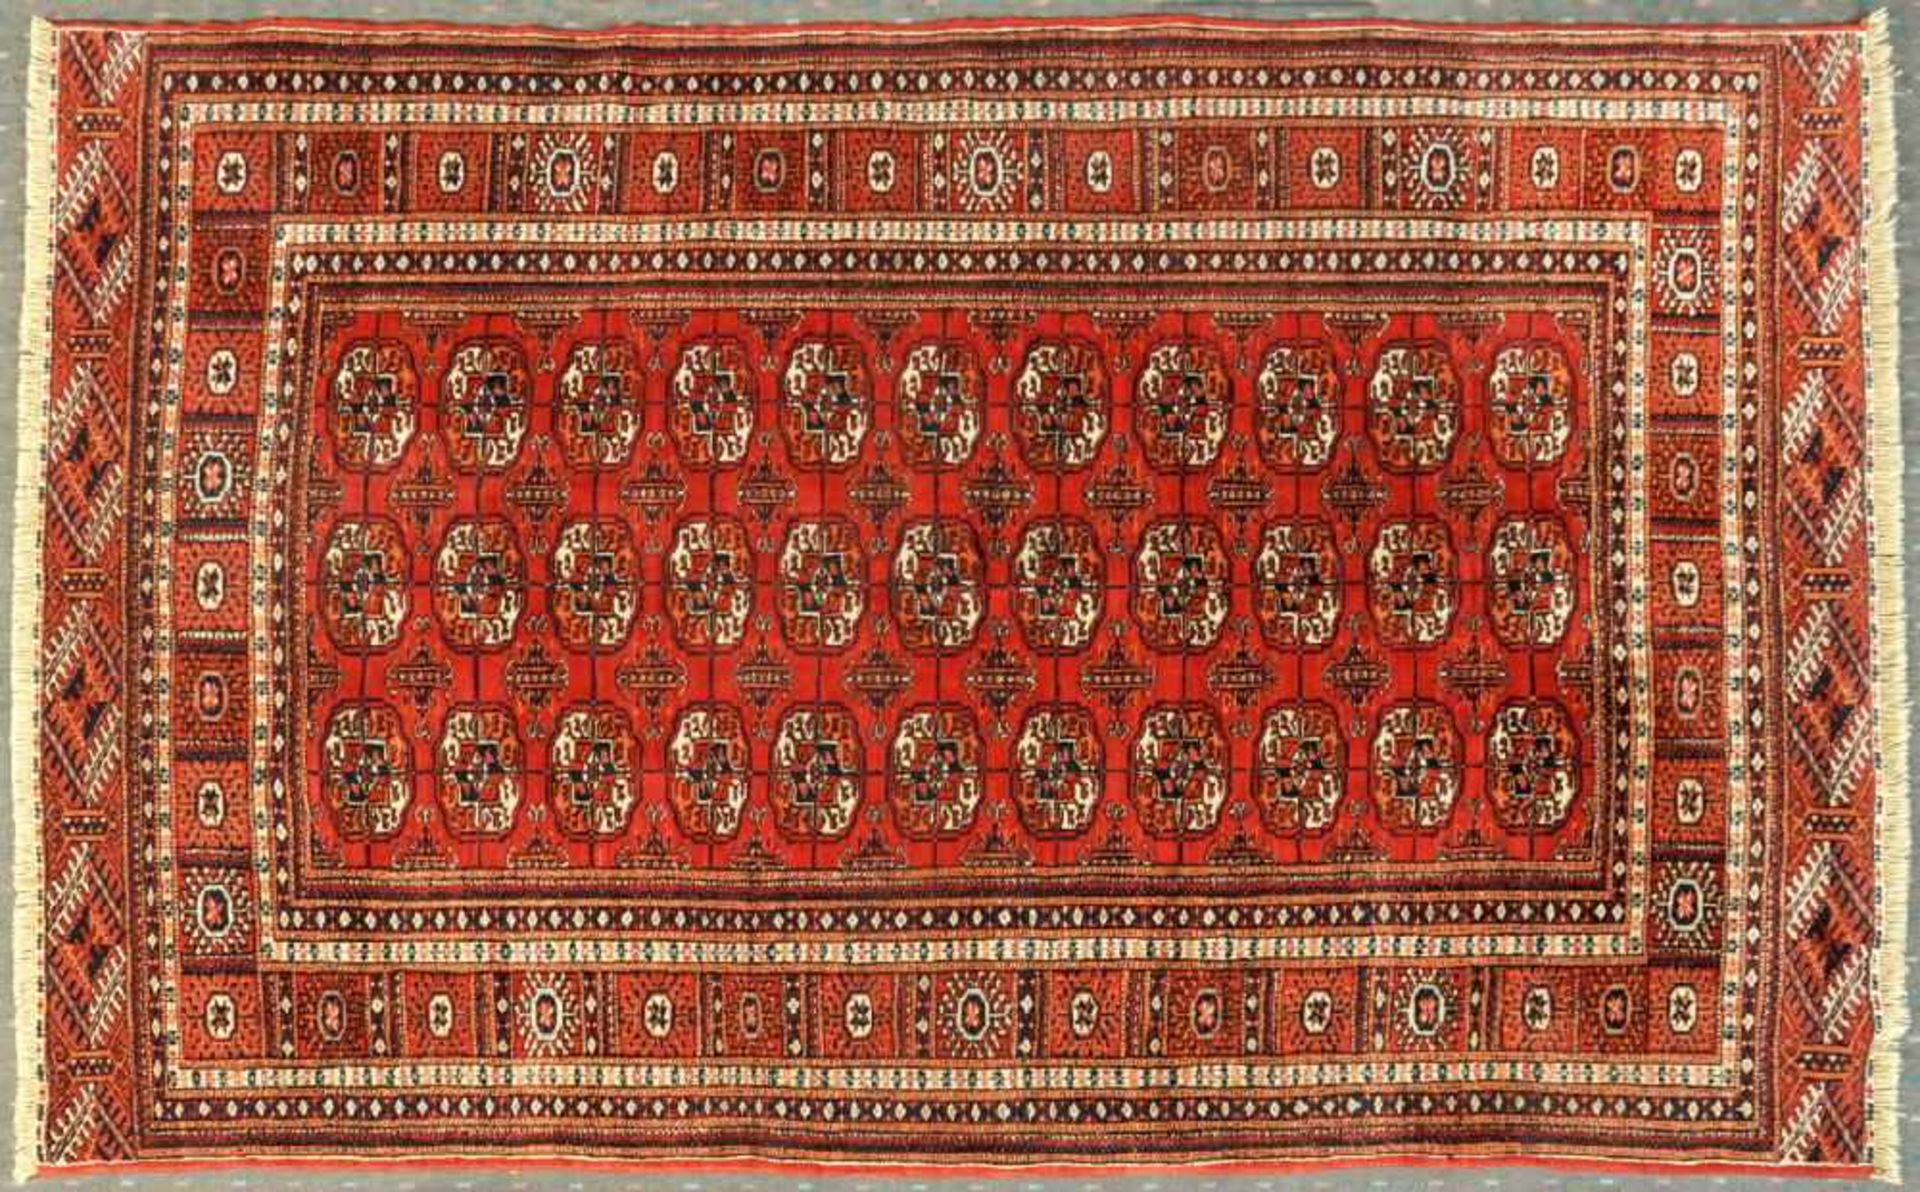 Bouchara, Turkmenien (?), 120 x 180 cmälter, Wolle, feine Knüpfung, rotgrundig, 3 fortlaufende